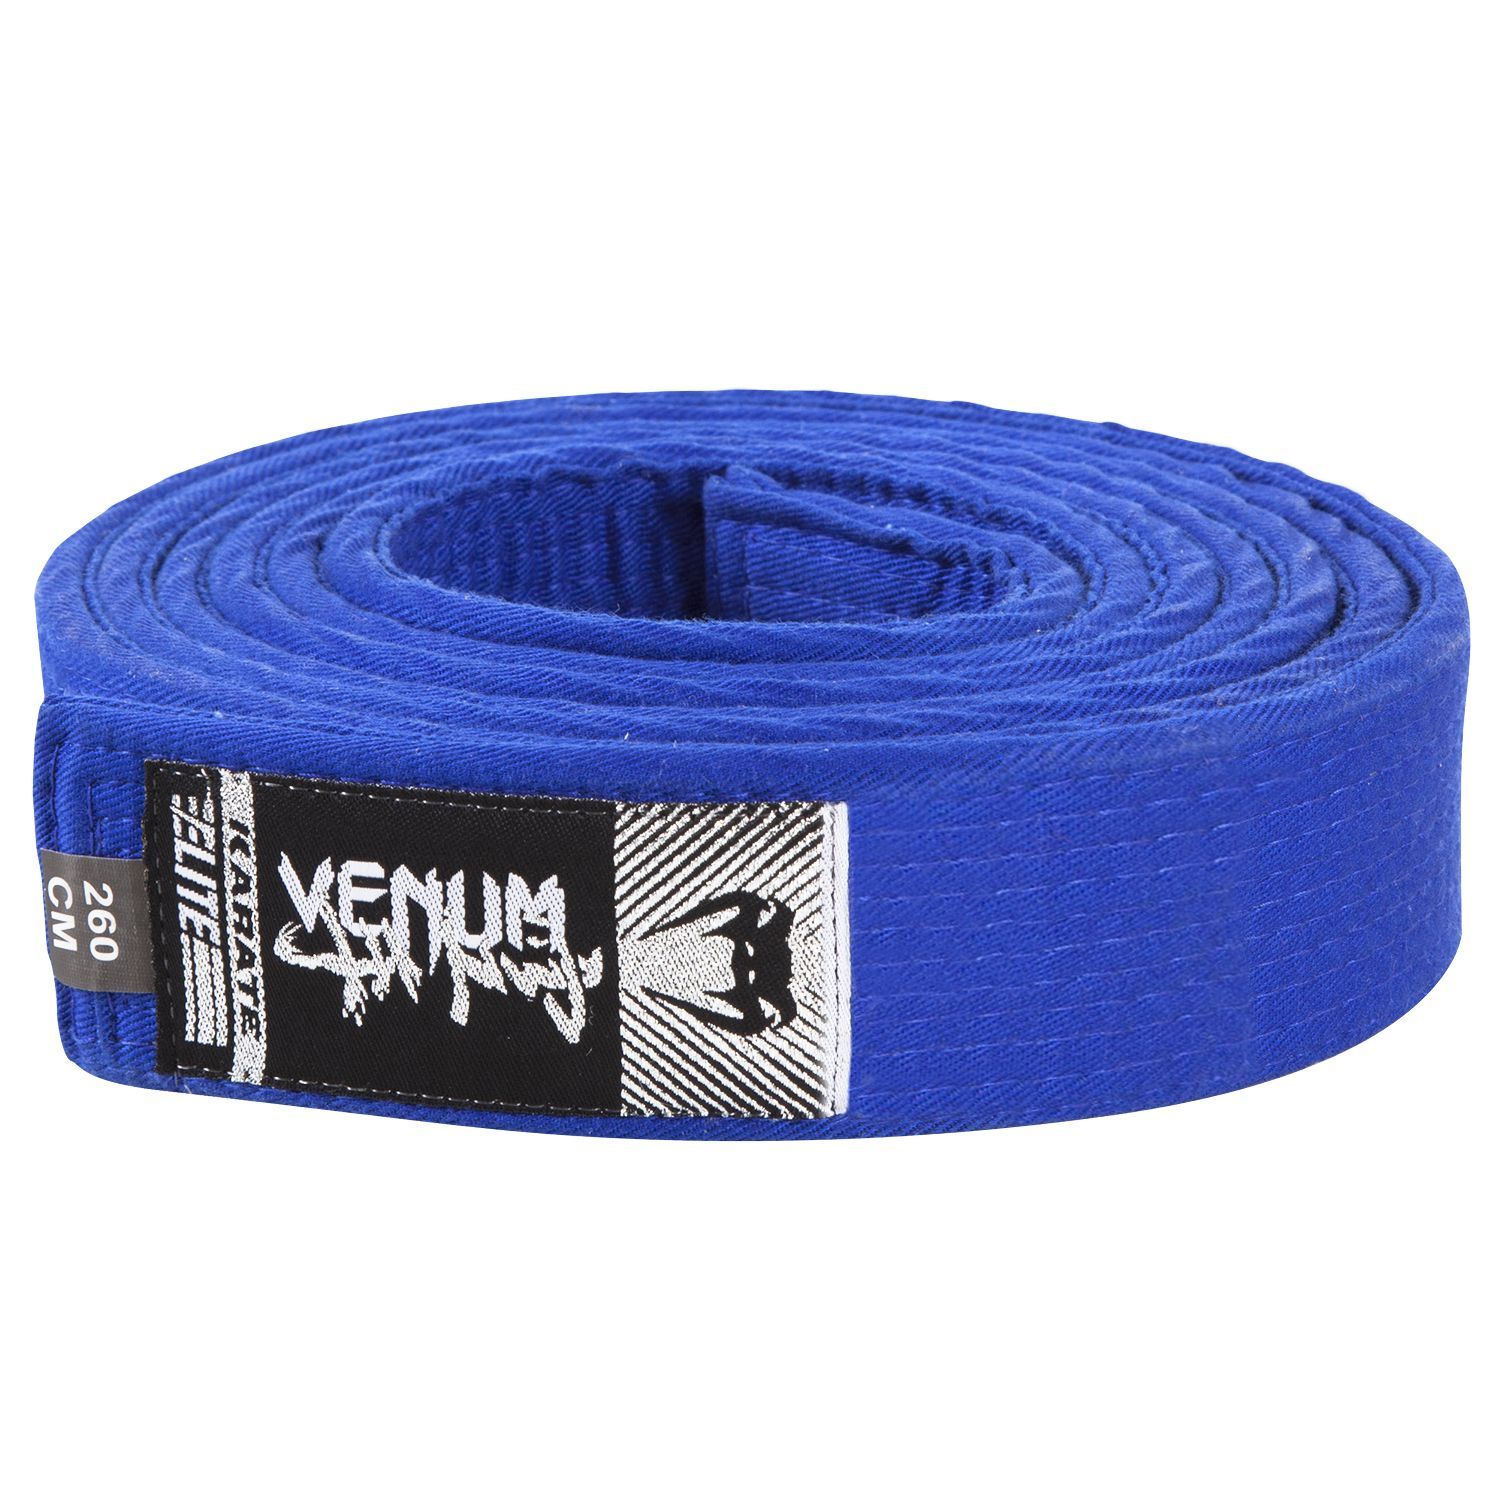 Cinturón Karate Venum - Azul